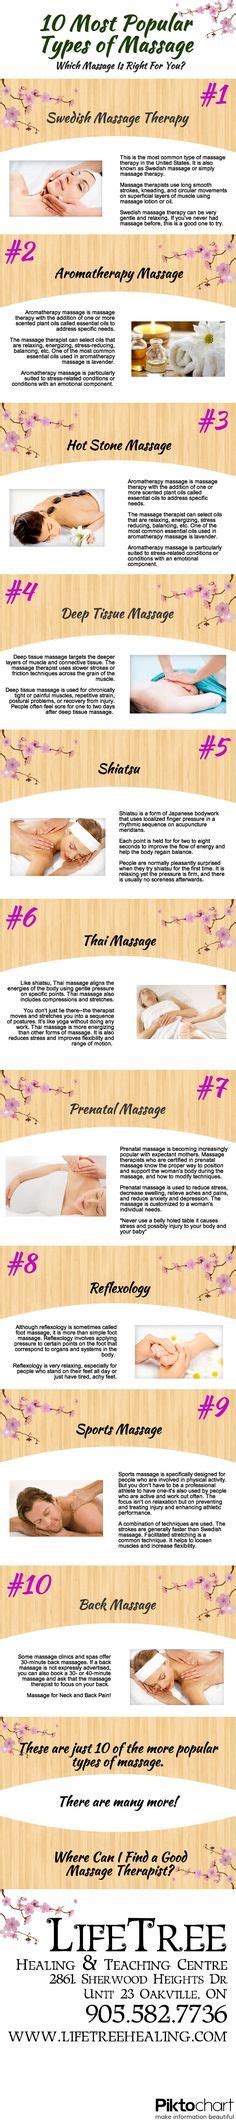 10 most popular types of massage lifetree massage massagetherapy